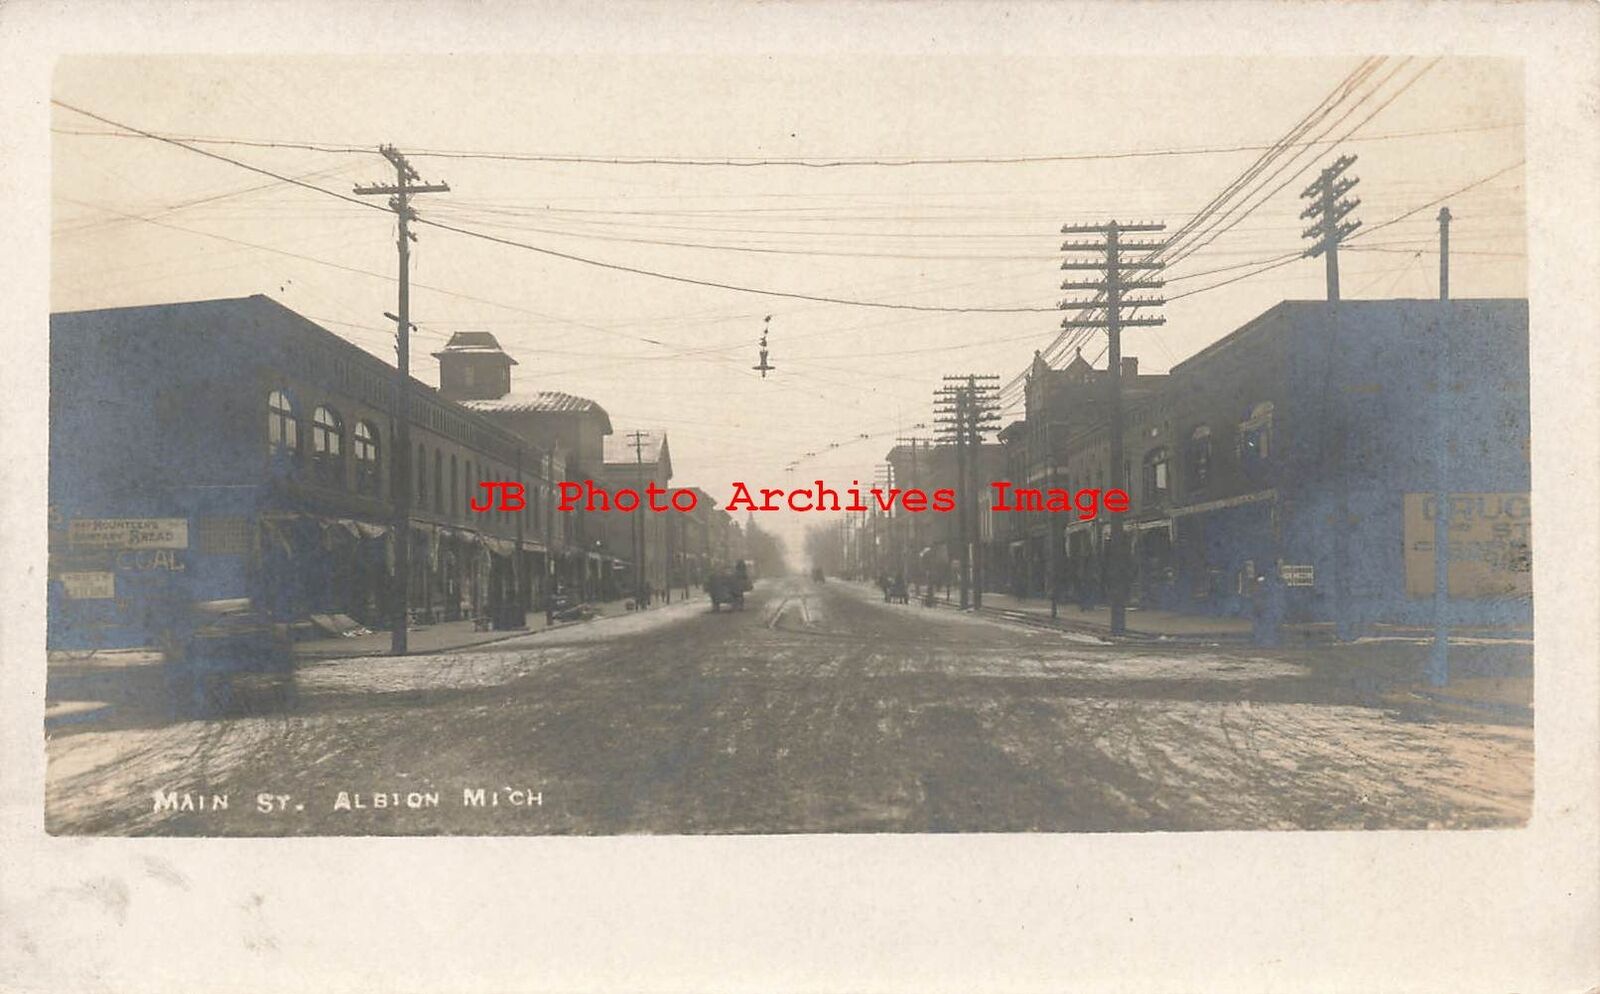 MI, Albion, Michigan, RPPC, Main Street, Business Section, Photo